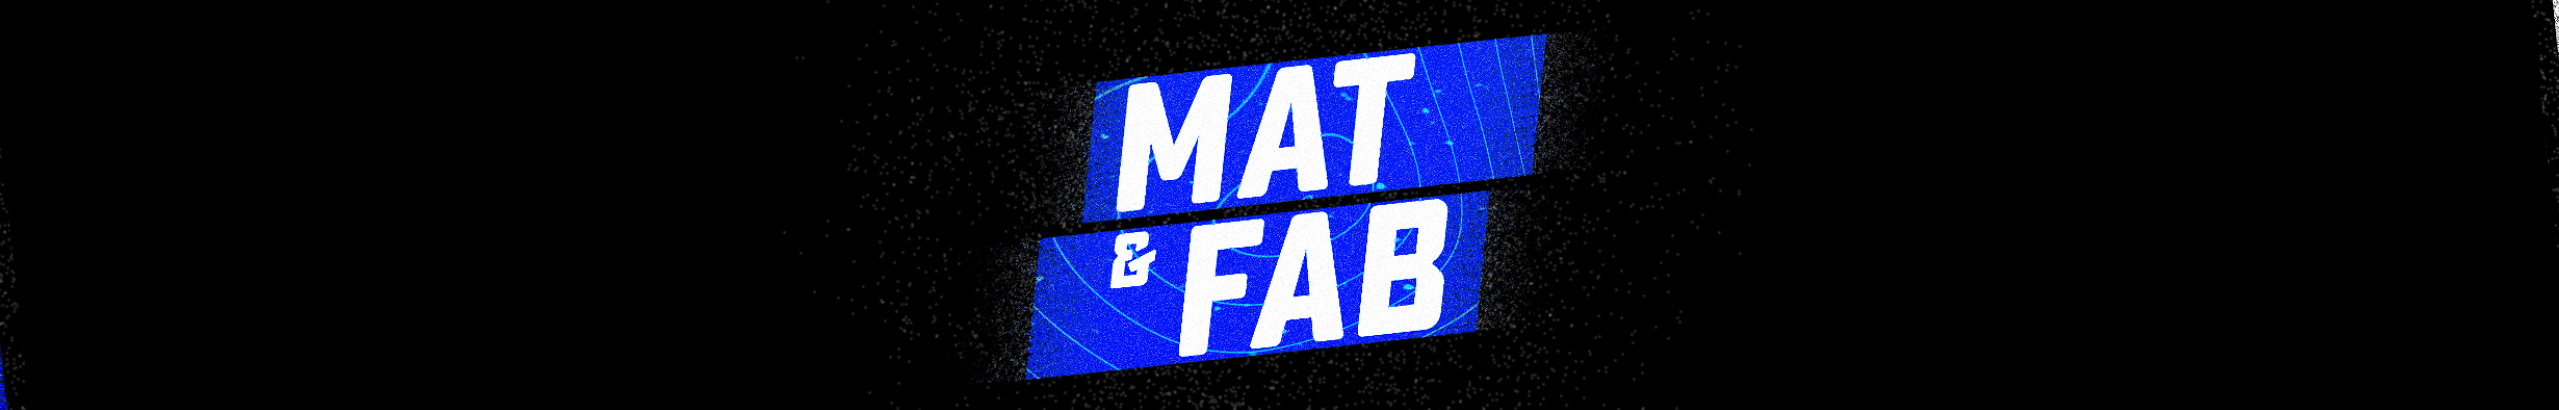 Mat & Fab *'s profile banner